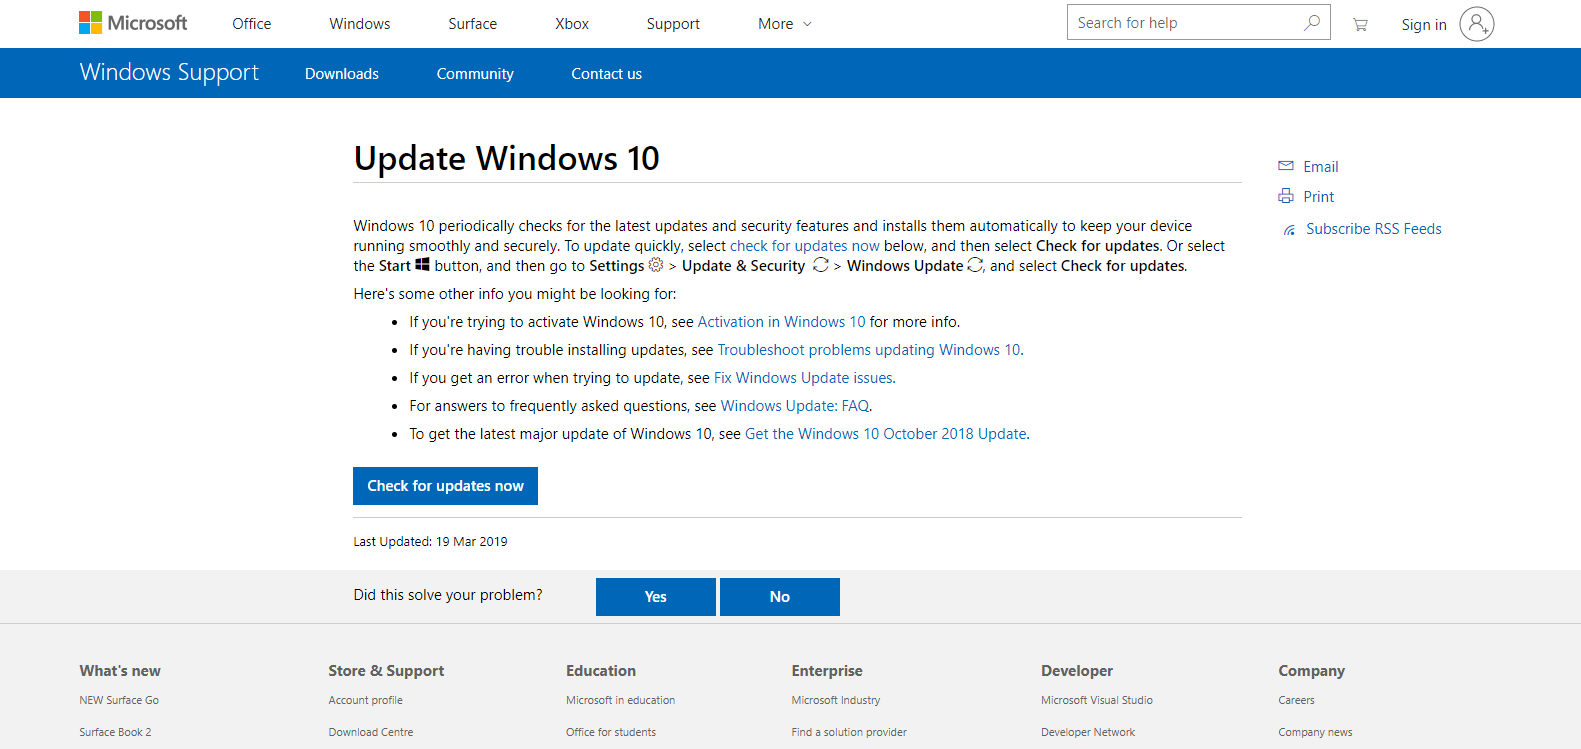 Microsoft Windows Update